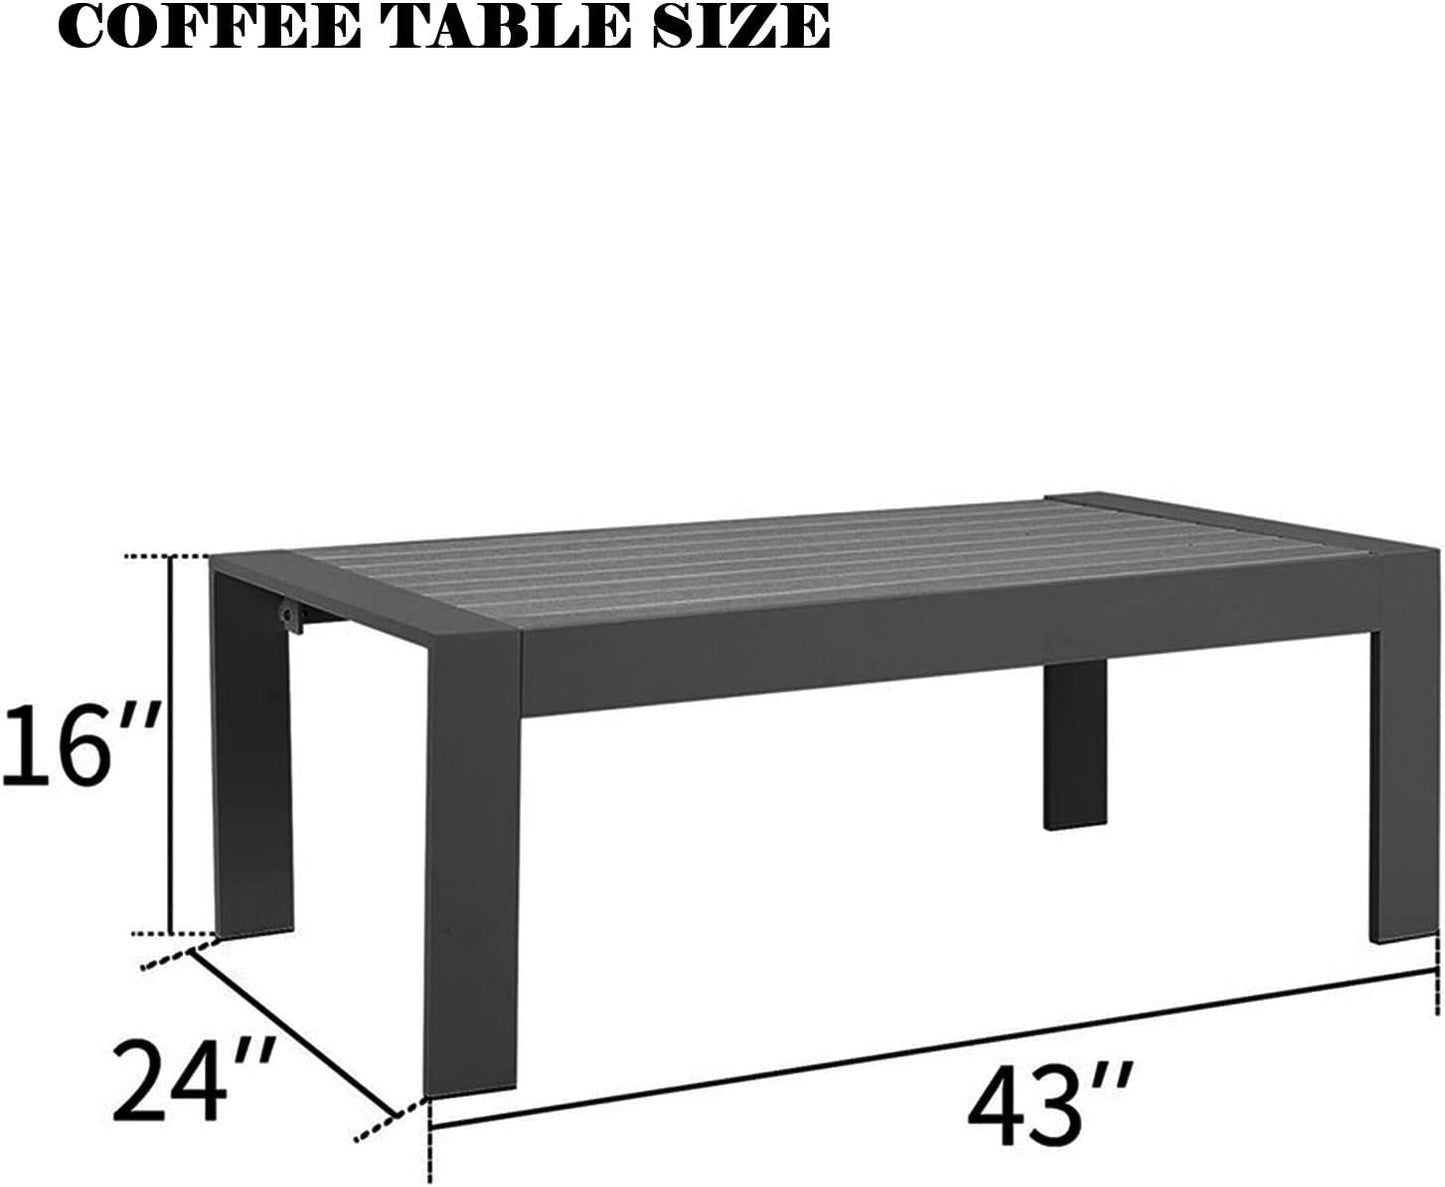 Aluminum Coffee Table